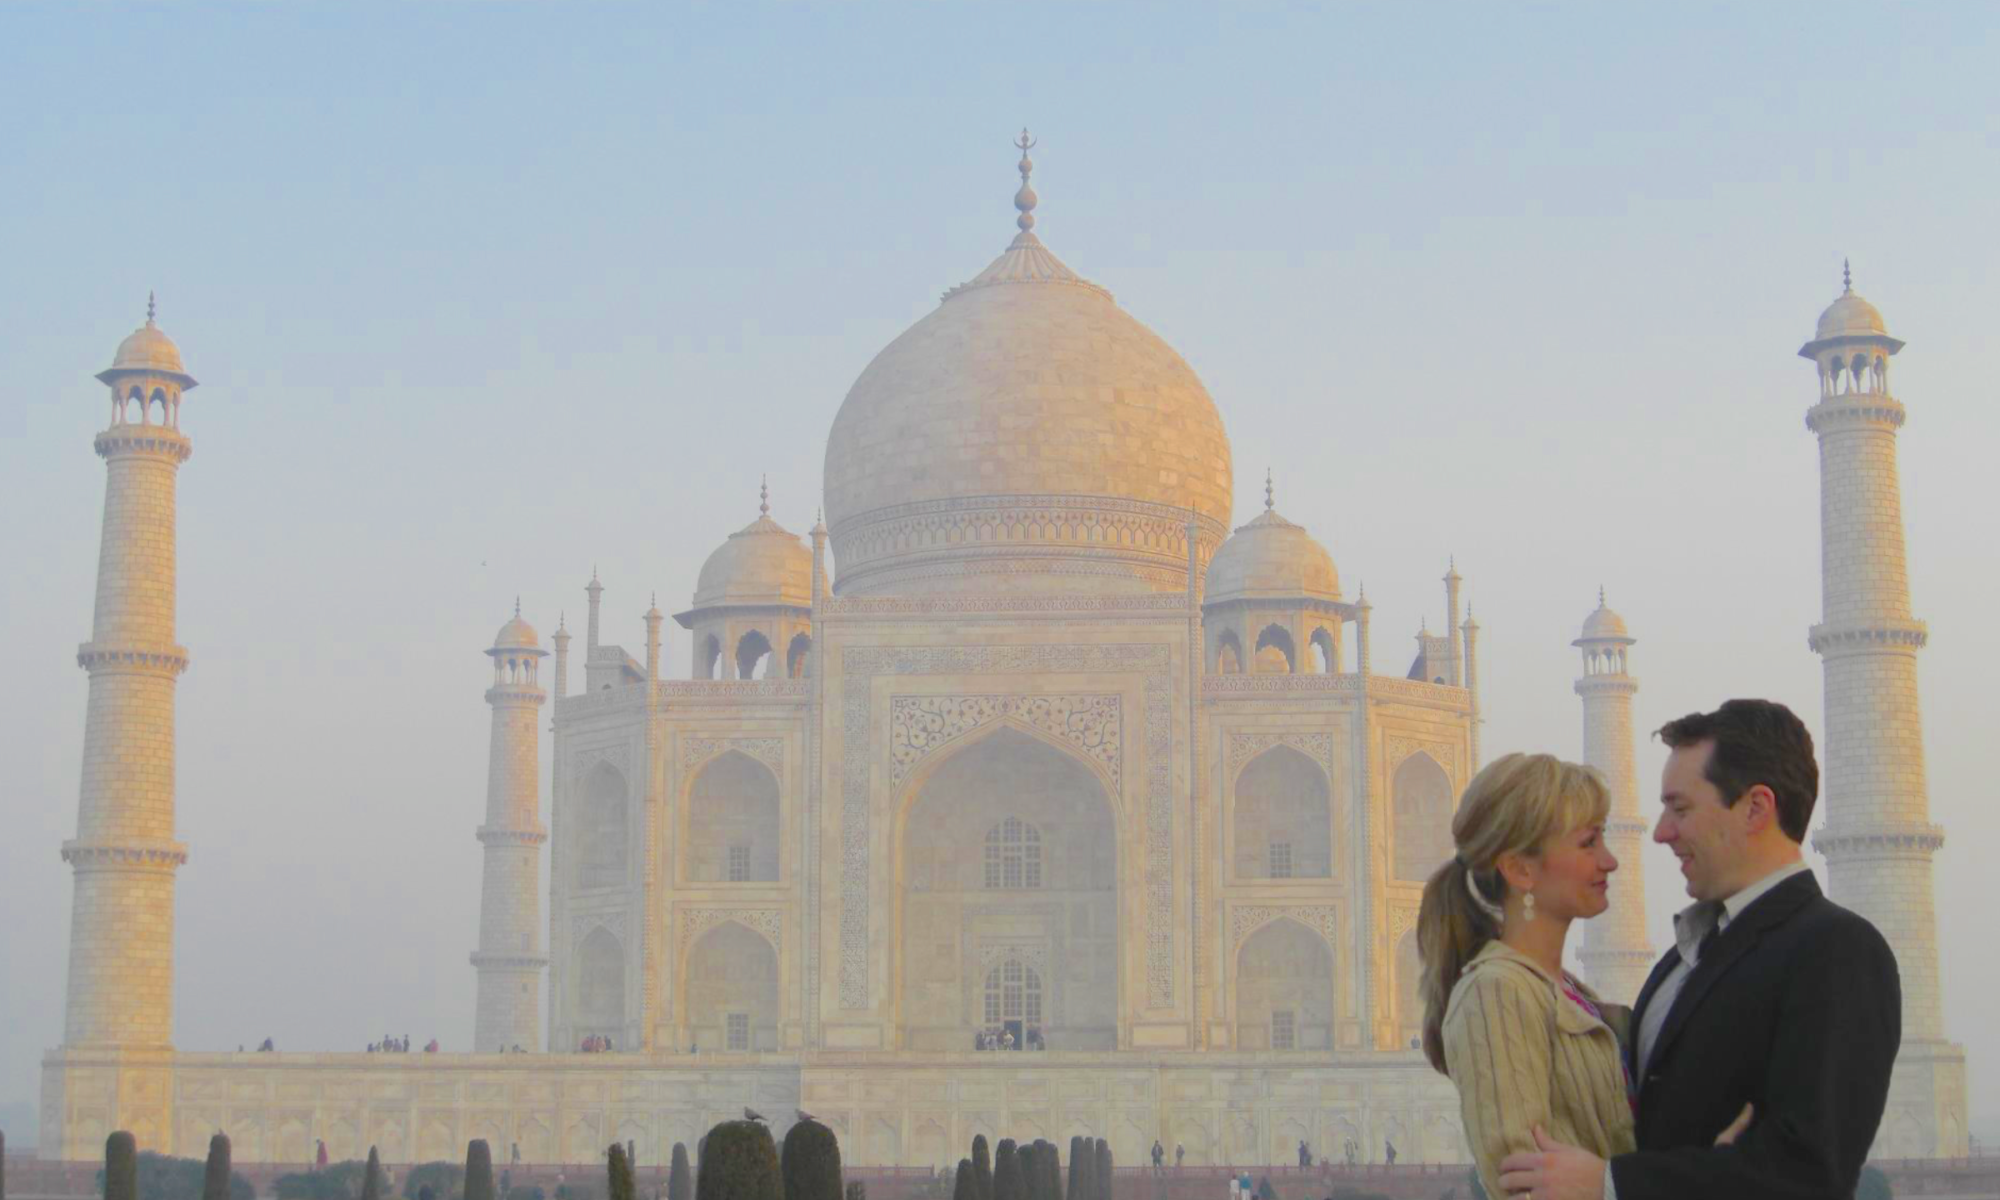 Taj Mahal travel when visiting India